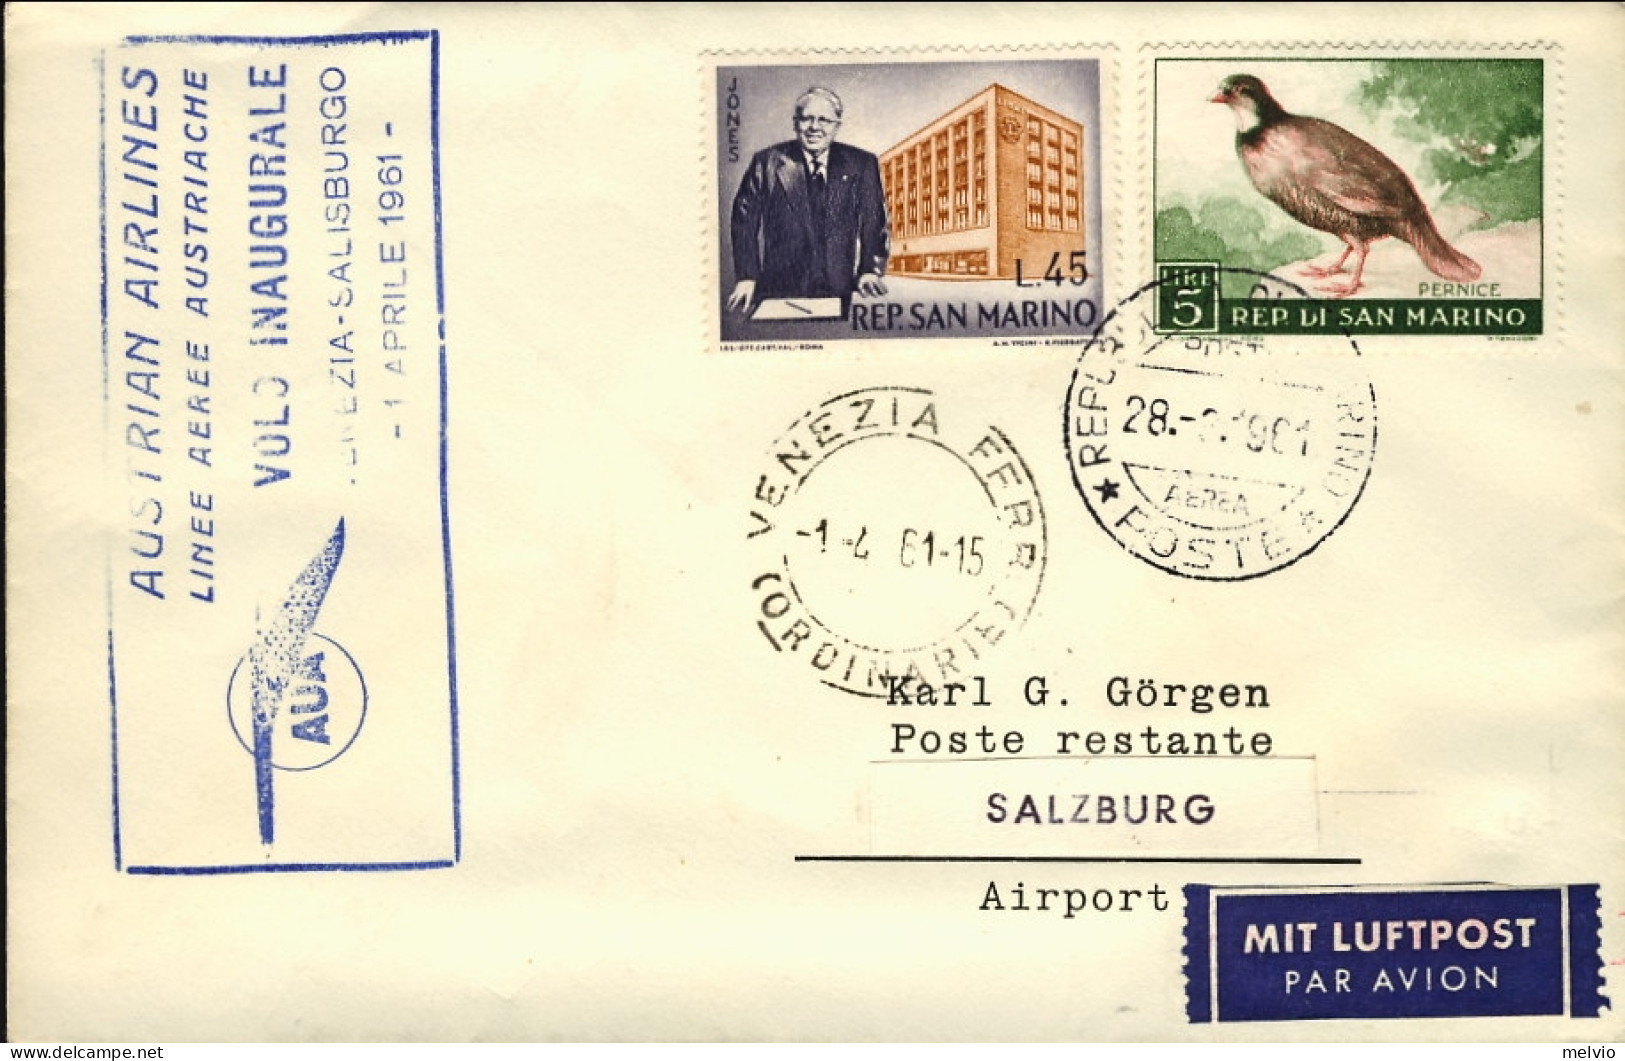 San Marino-1961 I^volo AUA Venezia Salisburgo Del 1 Aprile (40 Pezzi Trasportati - Luftpost